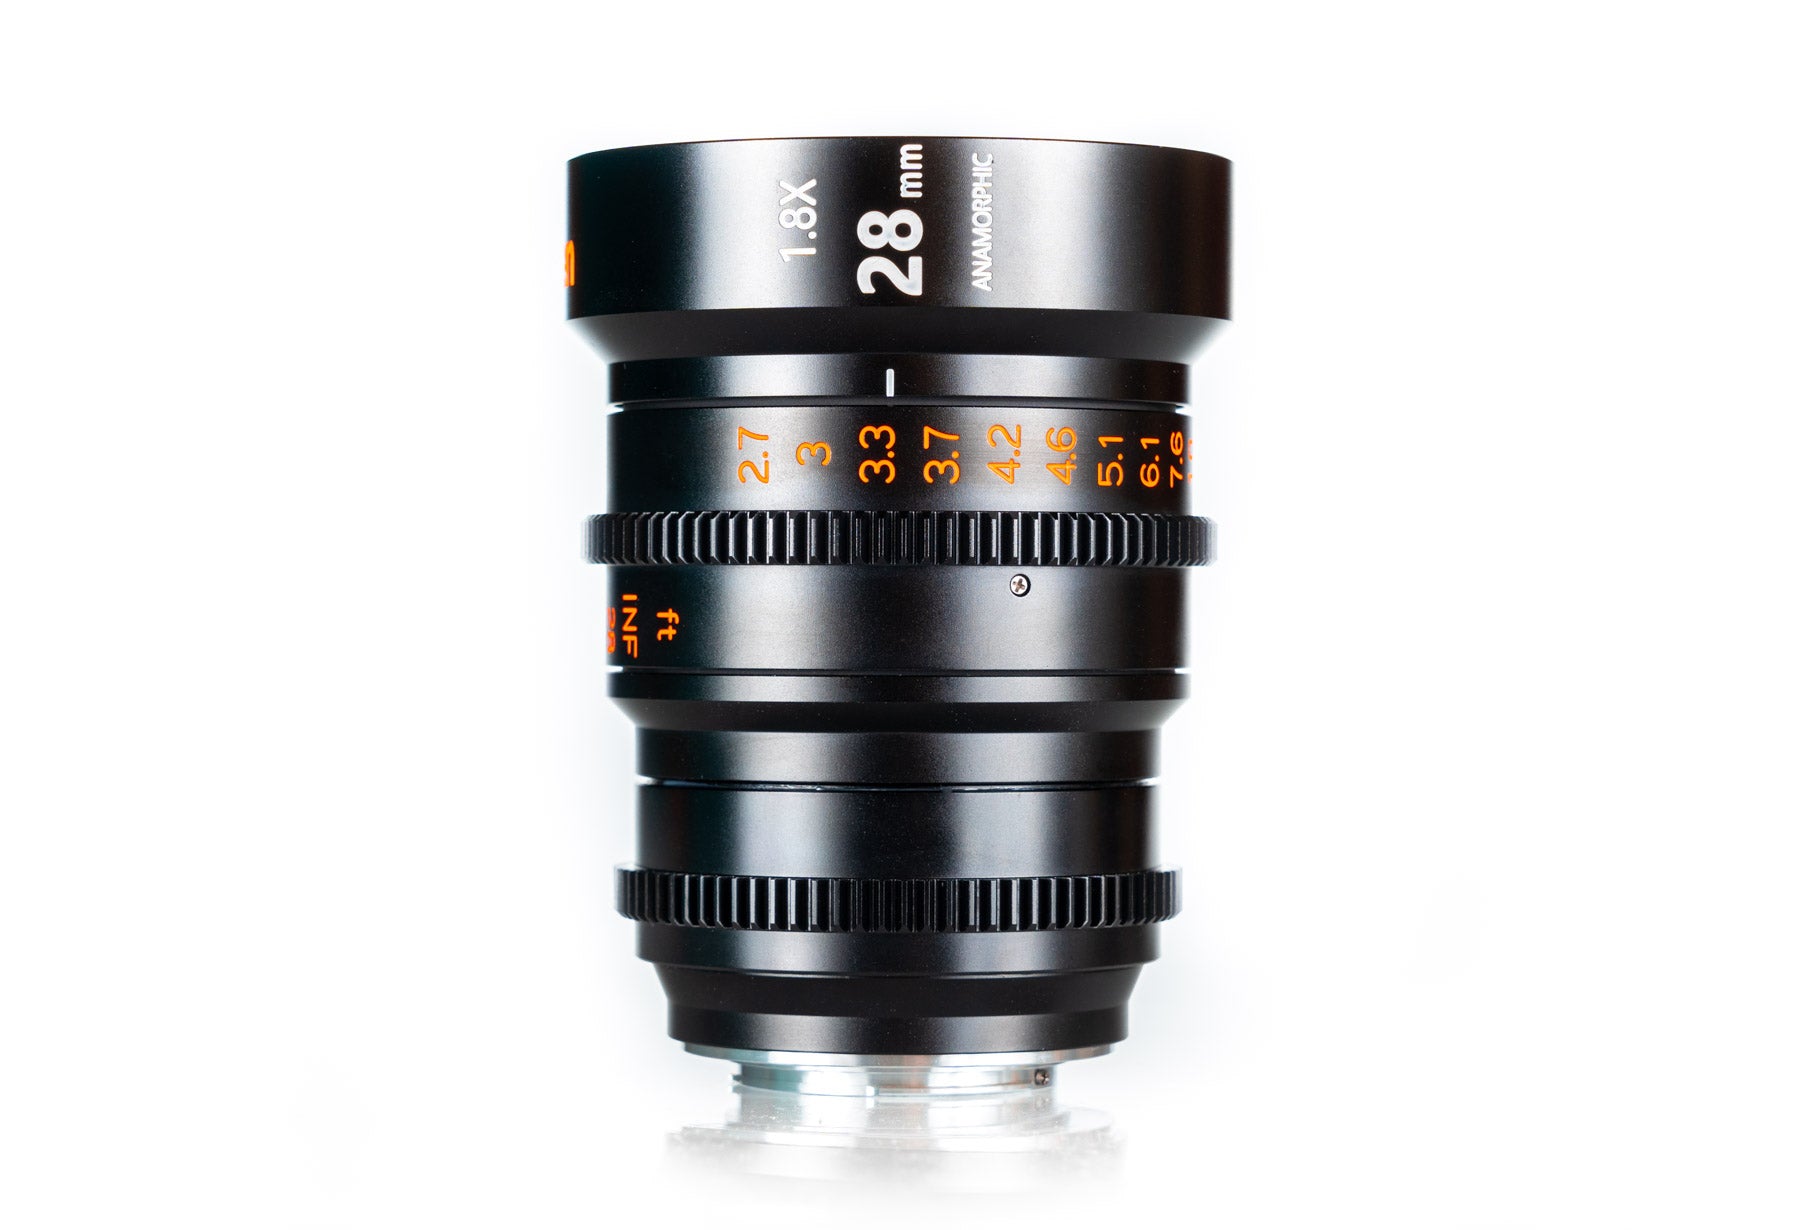 Vazen 28mm T/2.2 1.8X Anamorphic Lens for MFT Camera